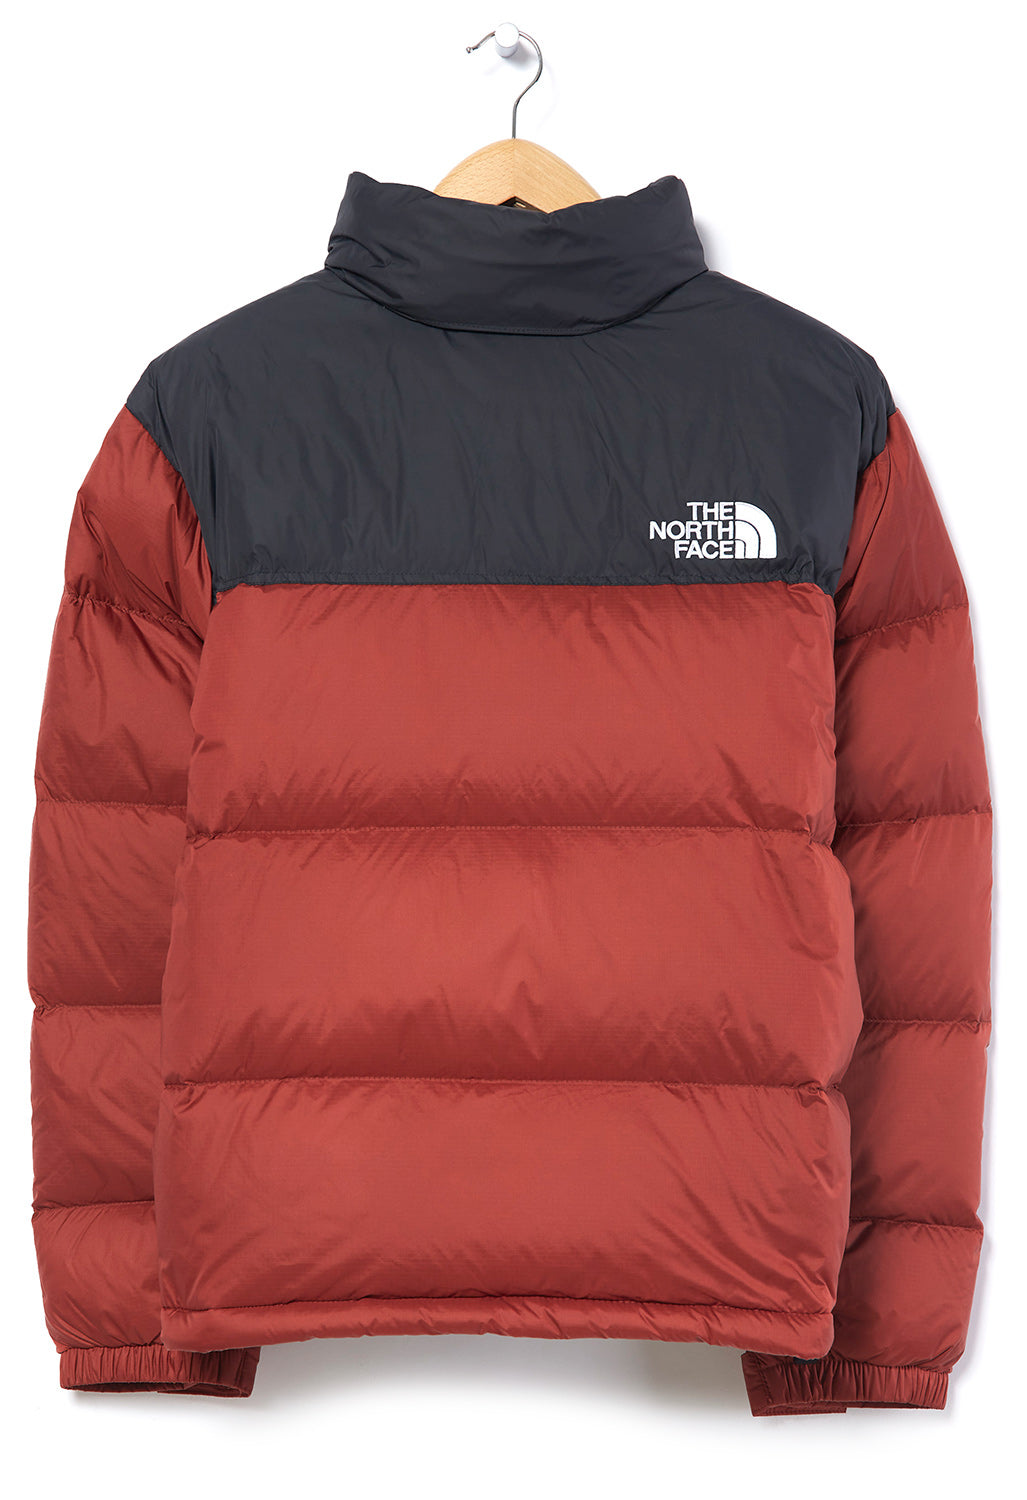 The North Face 1996 Retro Nuptse Men's Jacket - Brick House Red